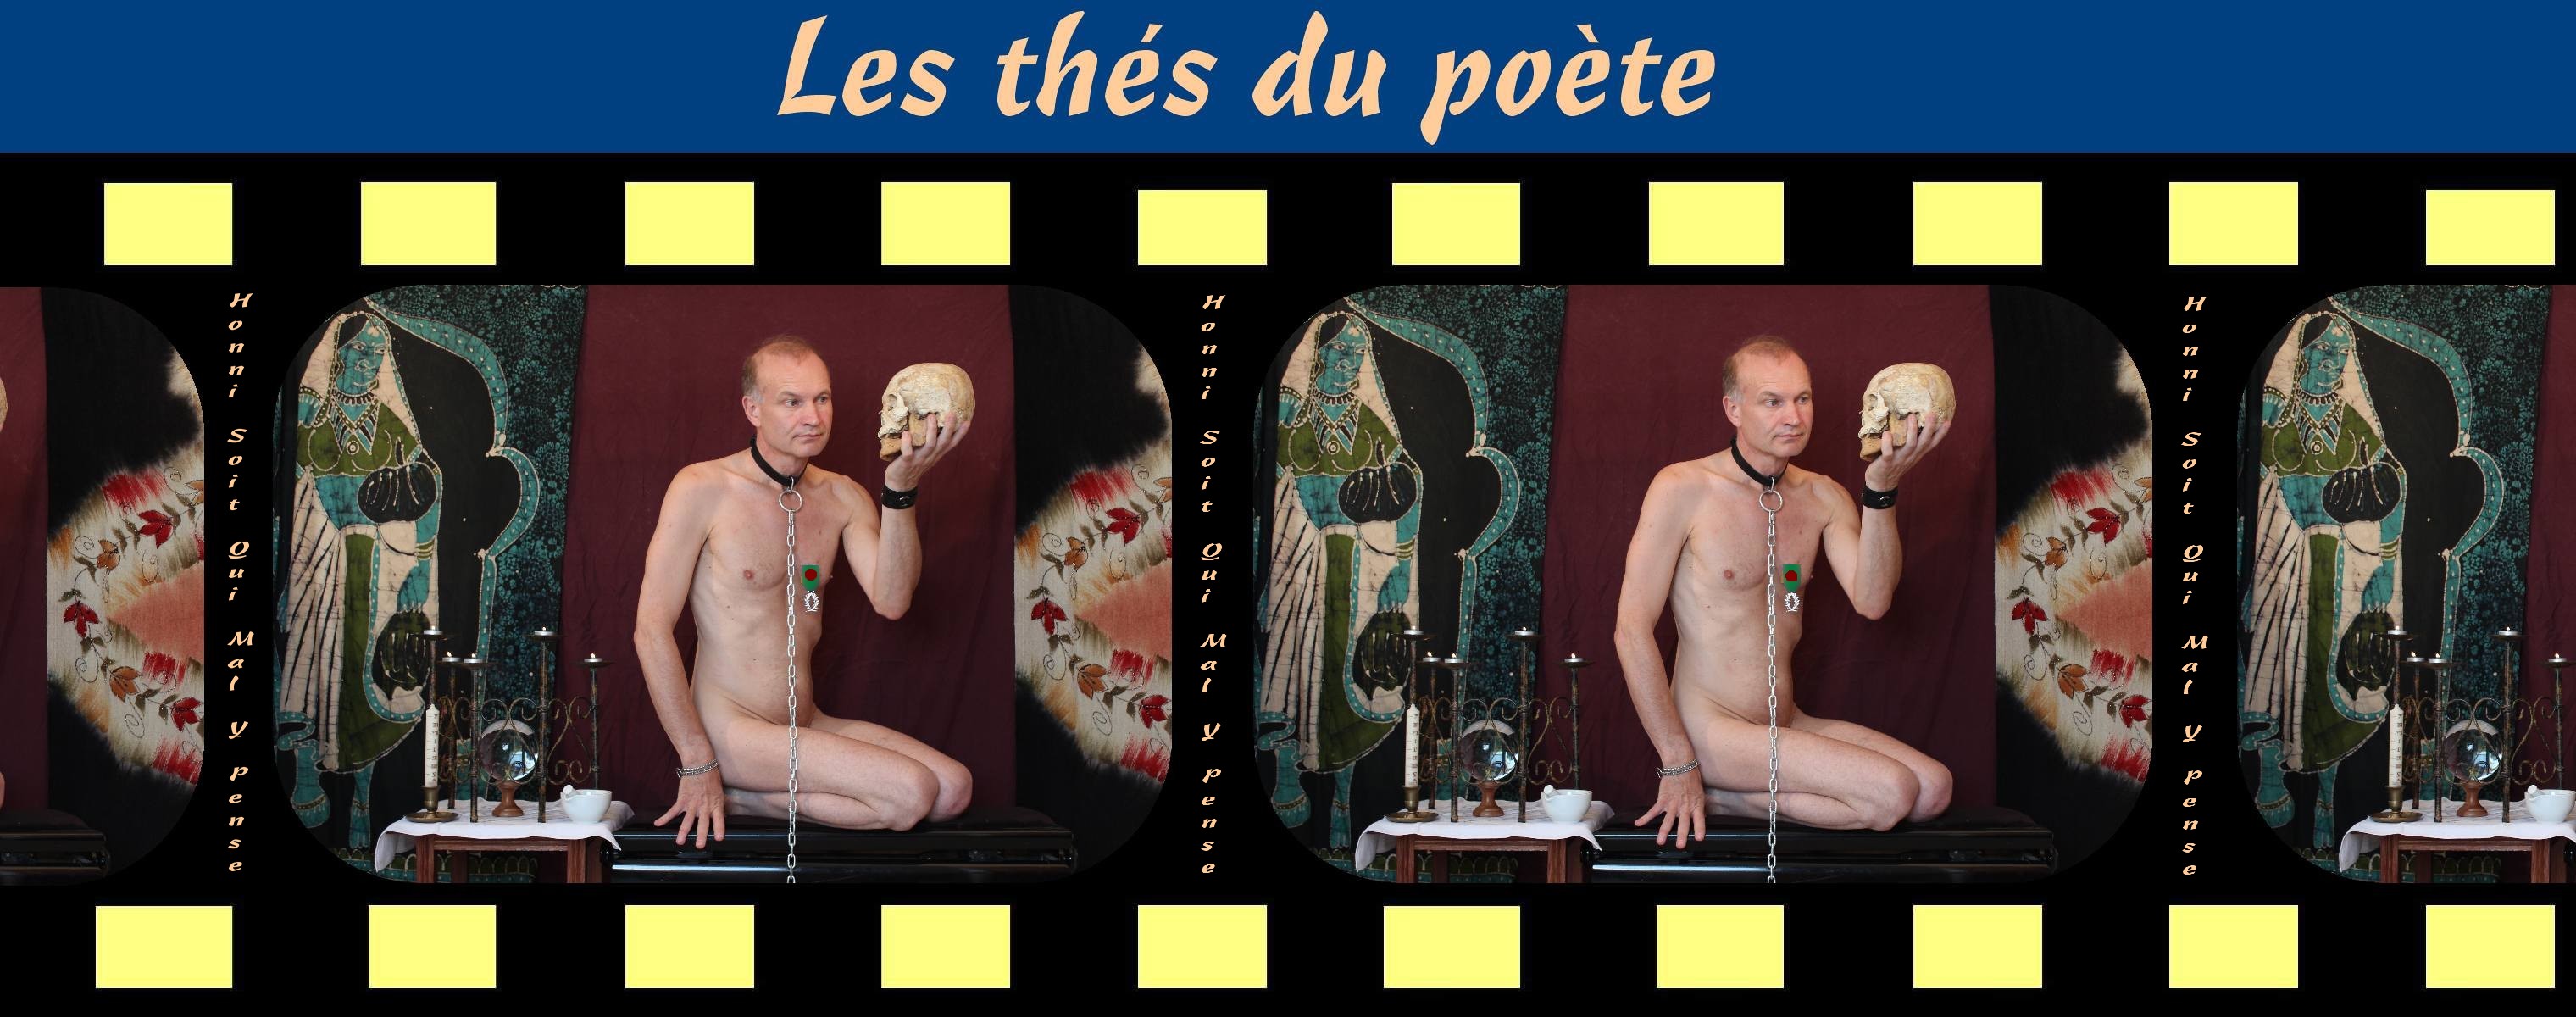 Welcome in obiterdictum, chez Mimile, the poet's teas, Honni Soit Qui Mal Y Pense